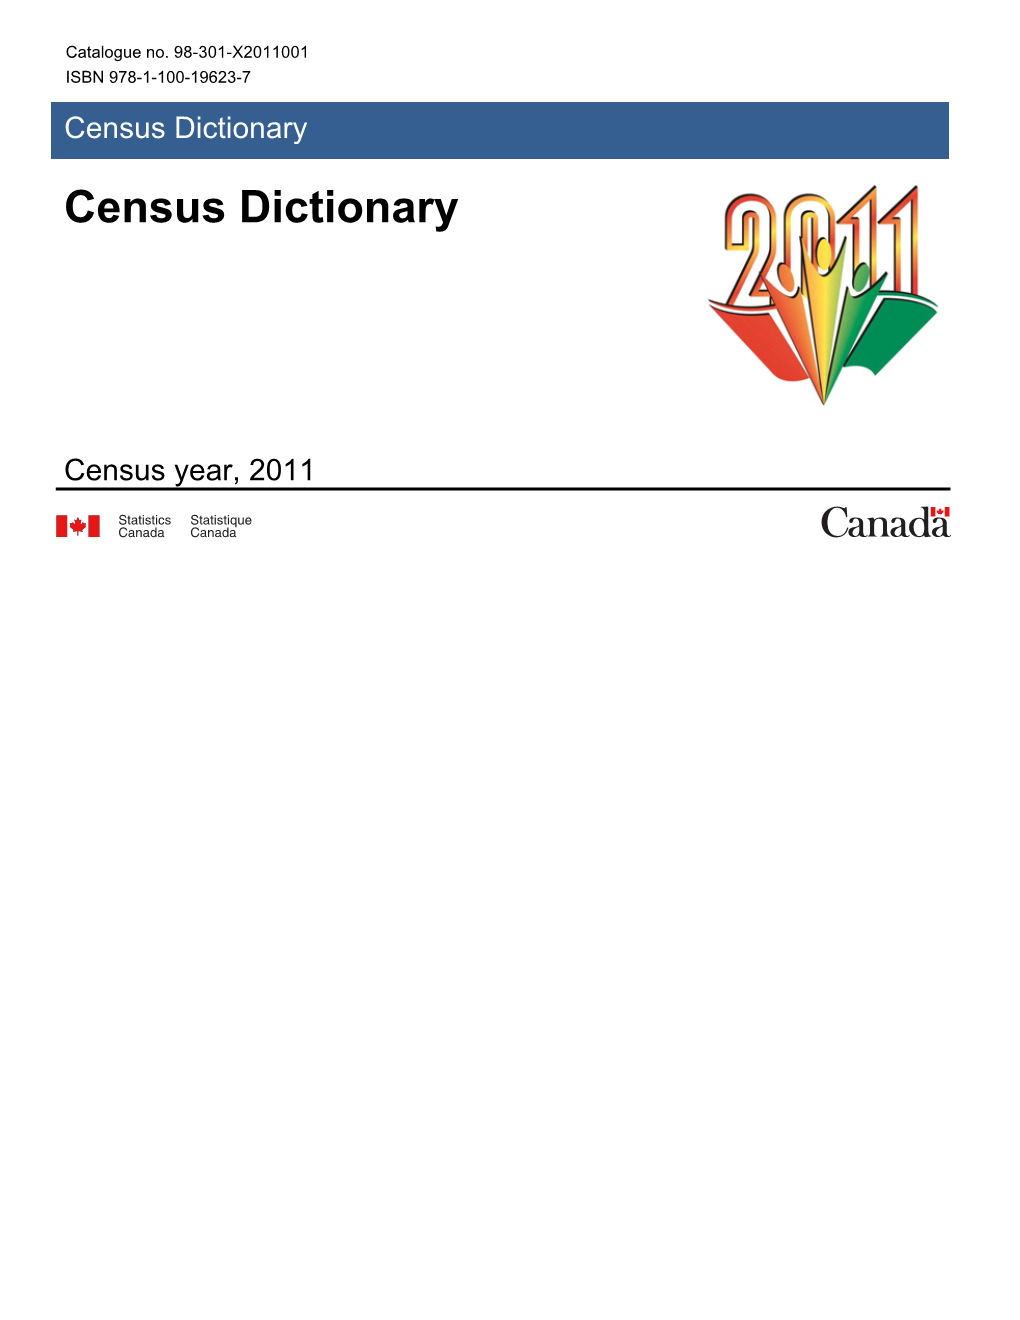 2011 Census Dictionary